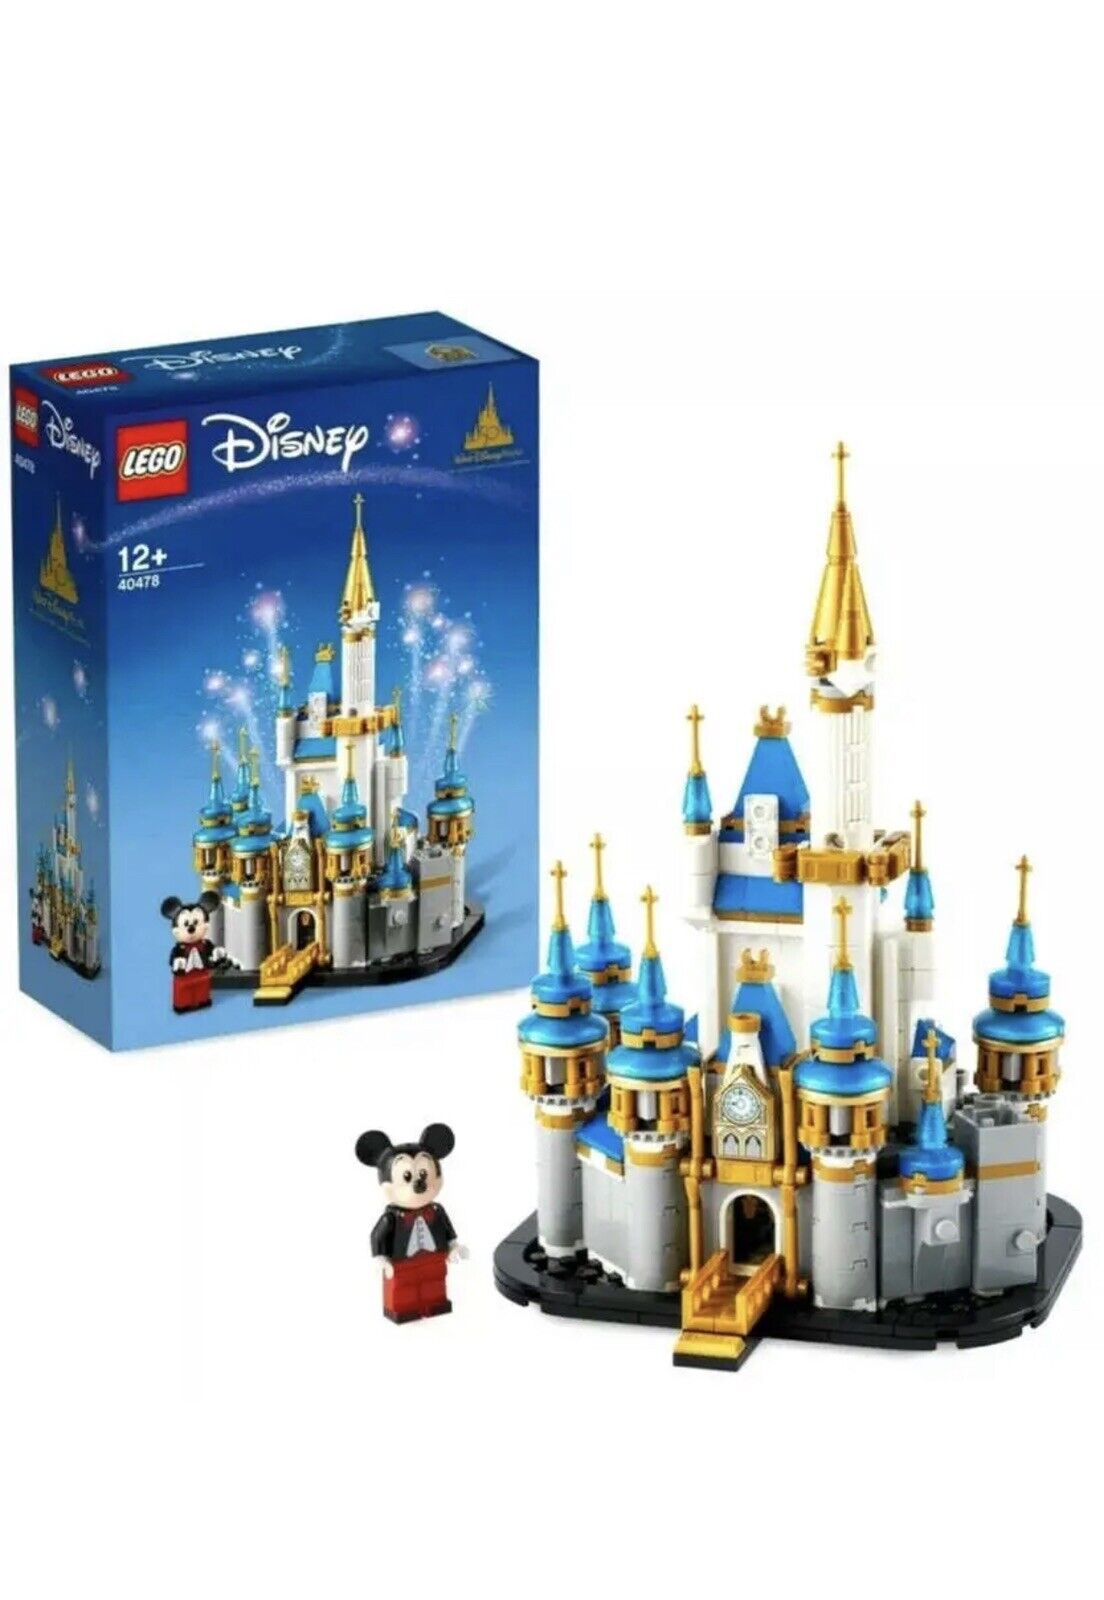 Walt Disney Lego Mini Castle - 40478